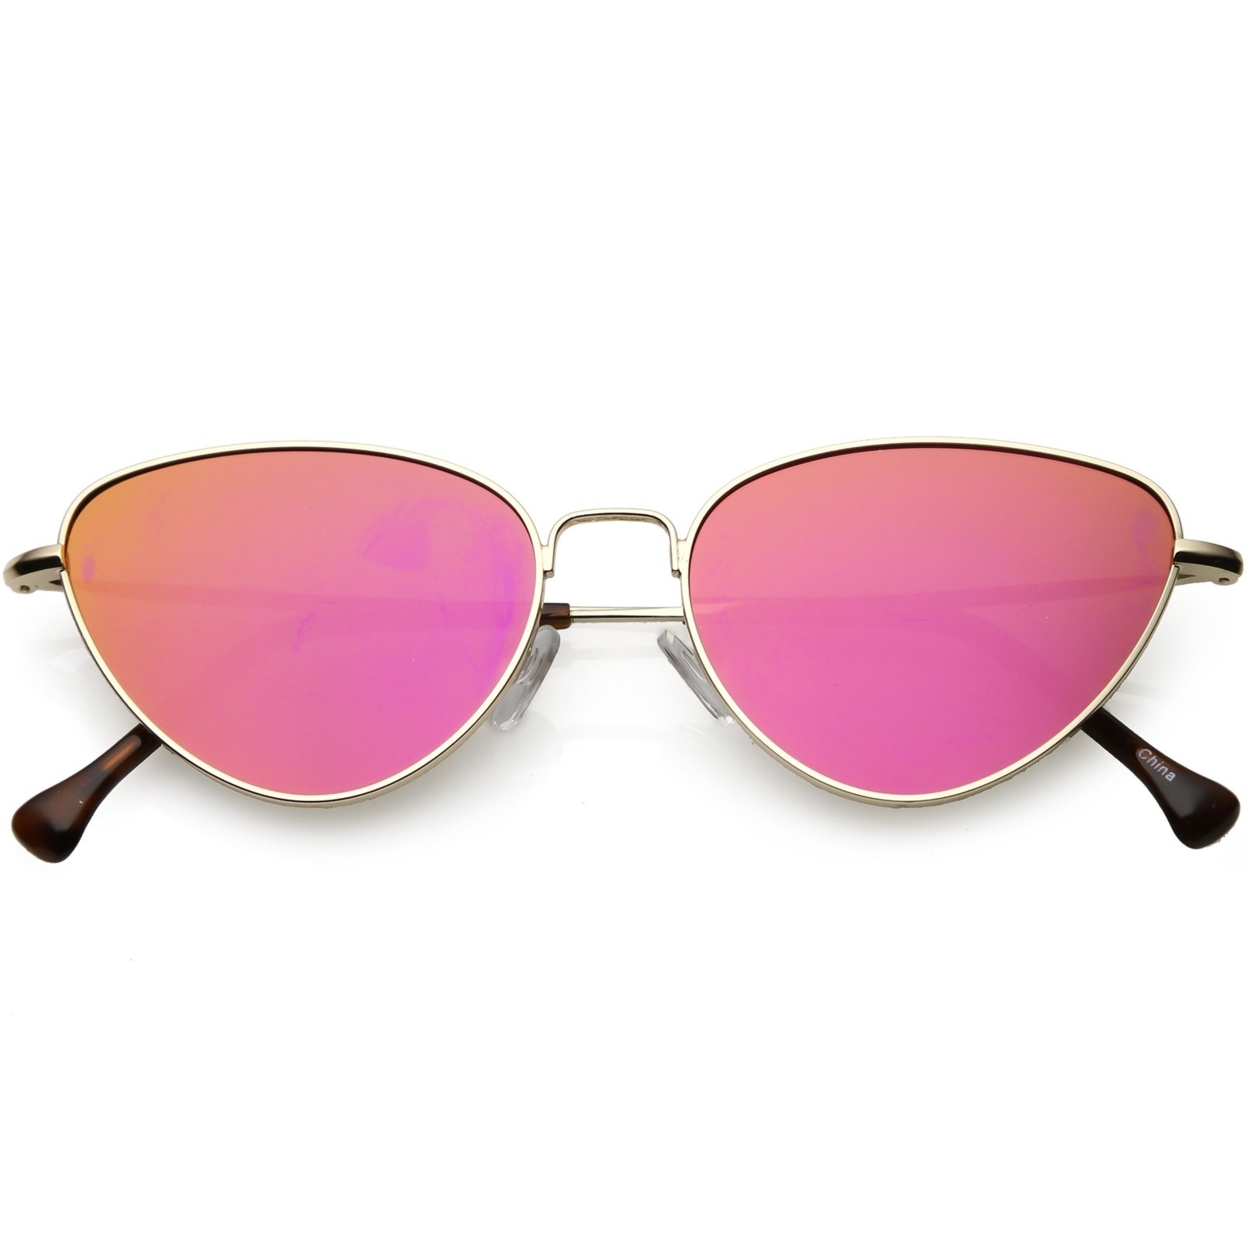 Women's Slim Metal Cat Eye Sunglasses Colored Mirror Flat Lens 54mm - Gold / Magenta Mirror